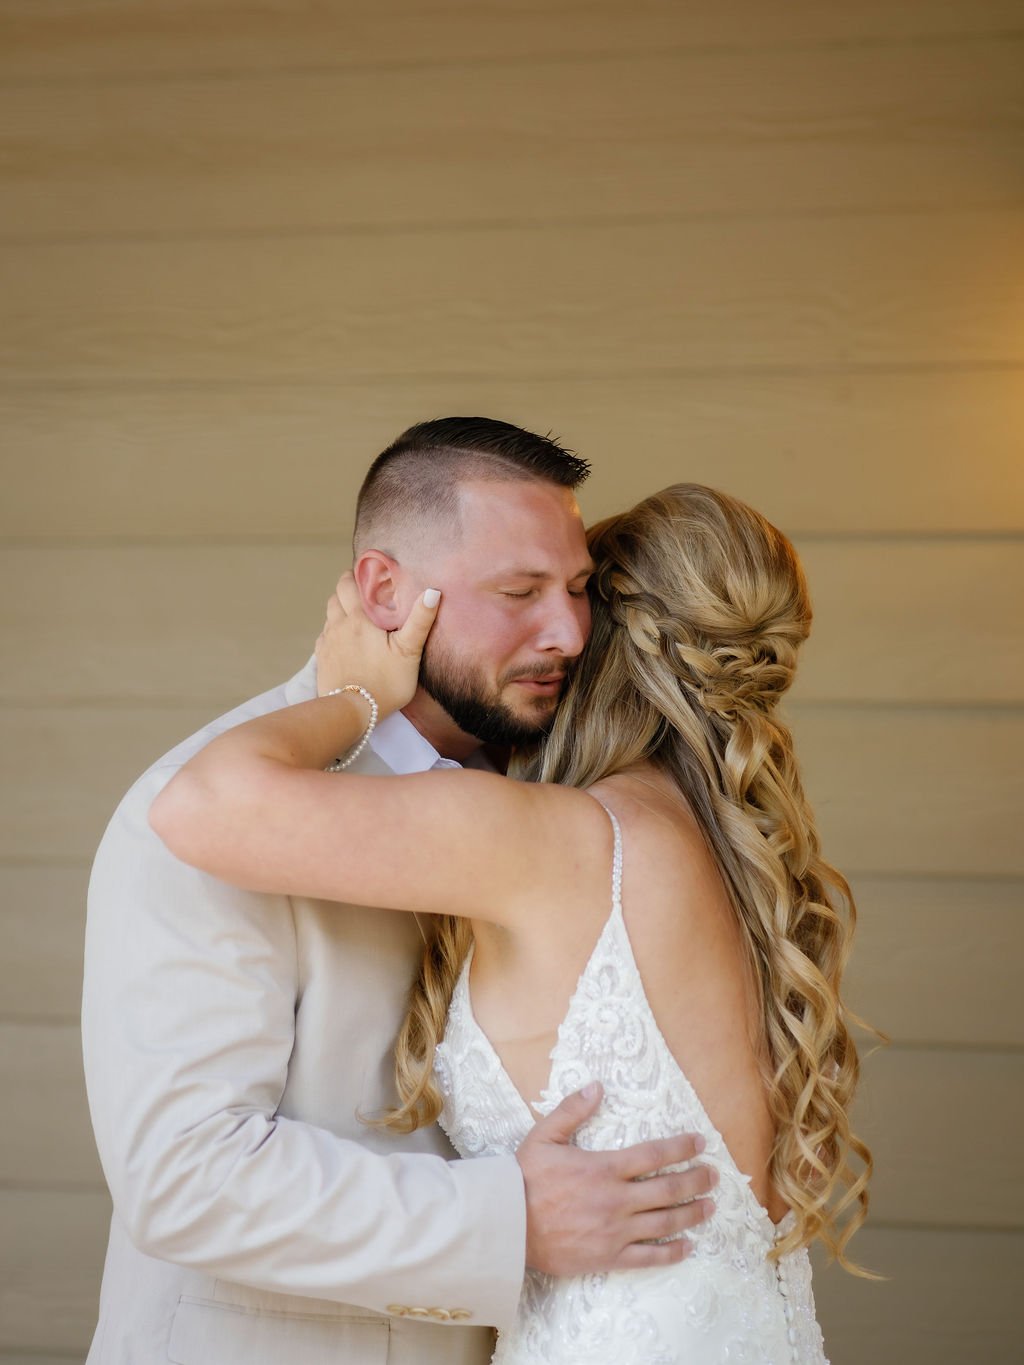 gatlinburg-wedding-photographer-if-uncles-brings-a-camera-to-a-gatlinburg-wedding-couple-hugging